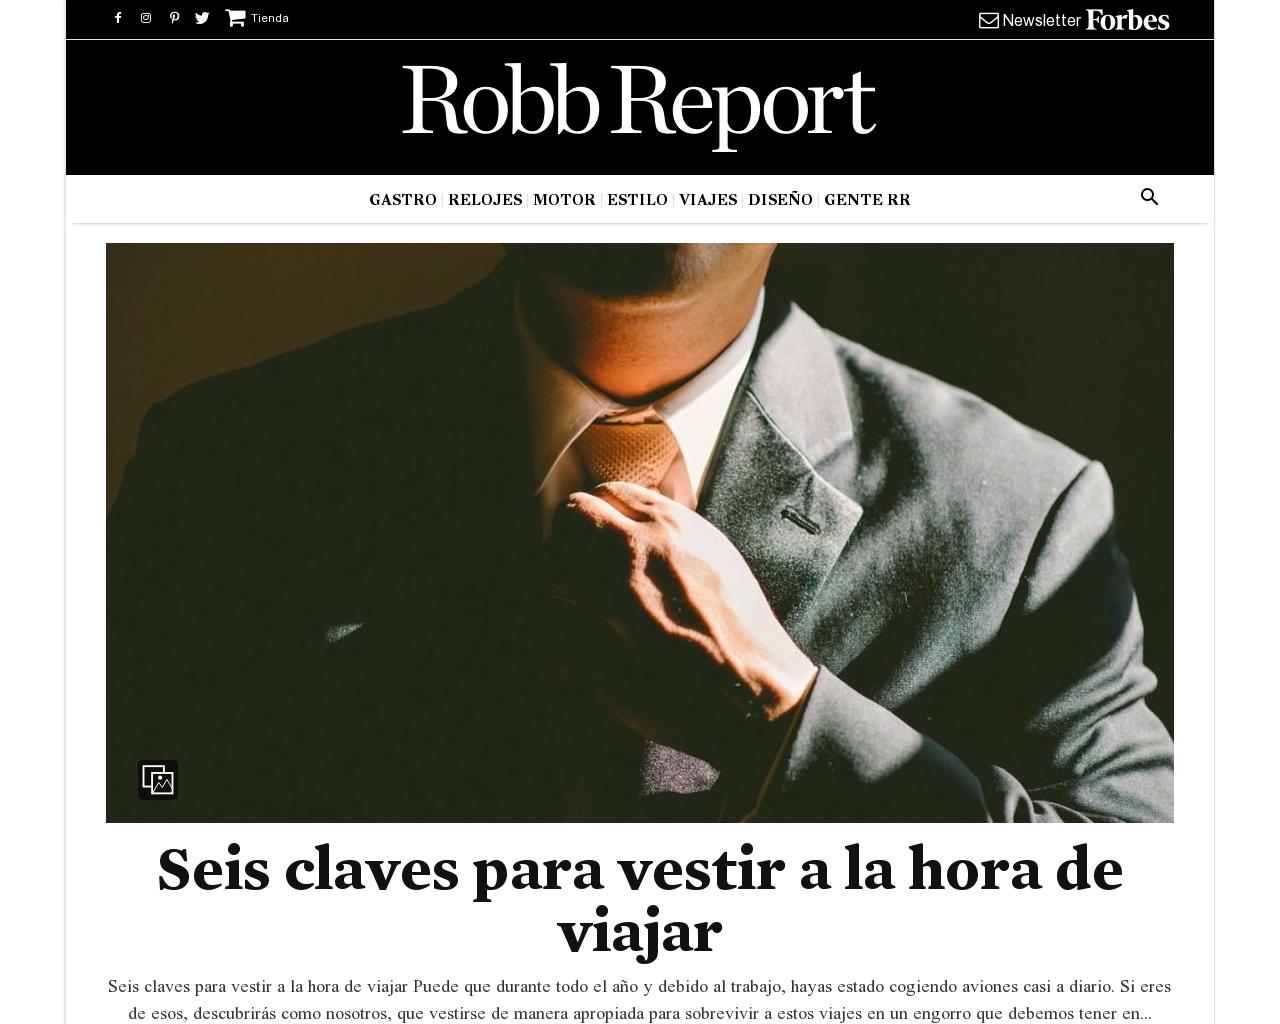 robbreport.es